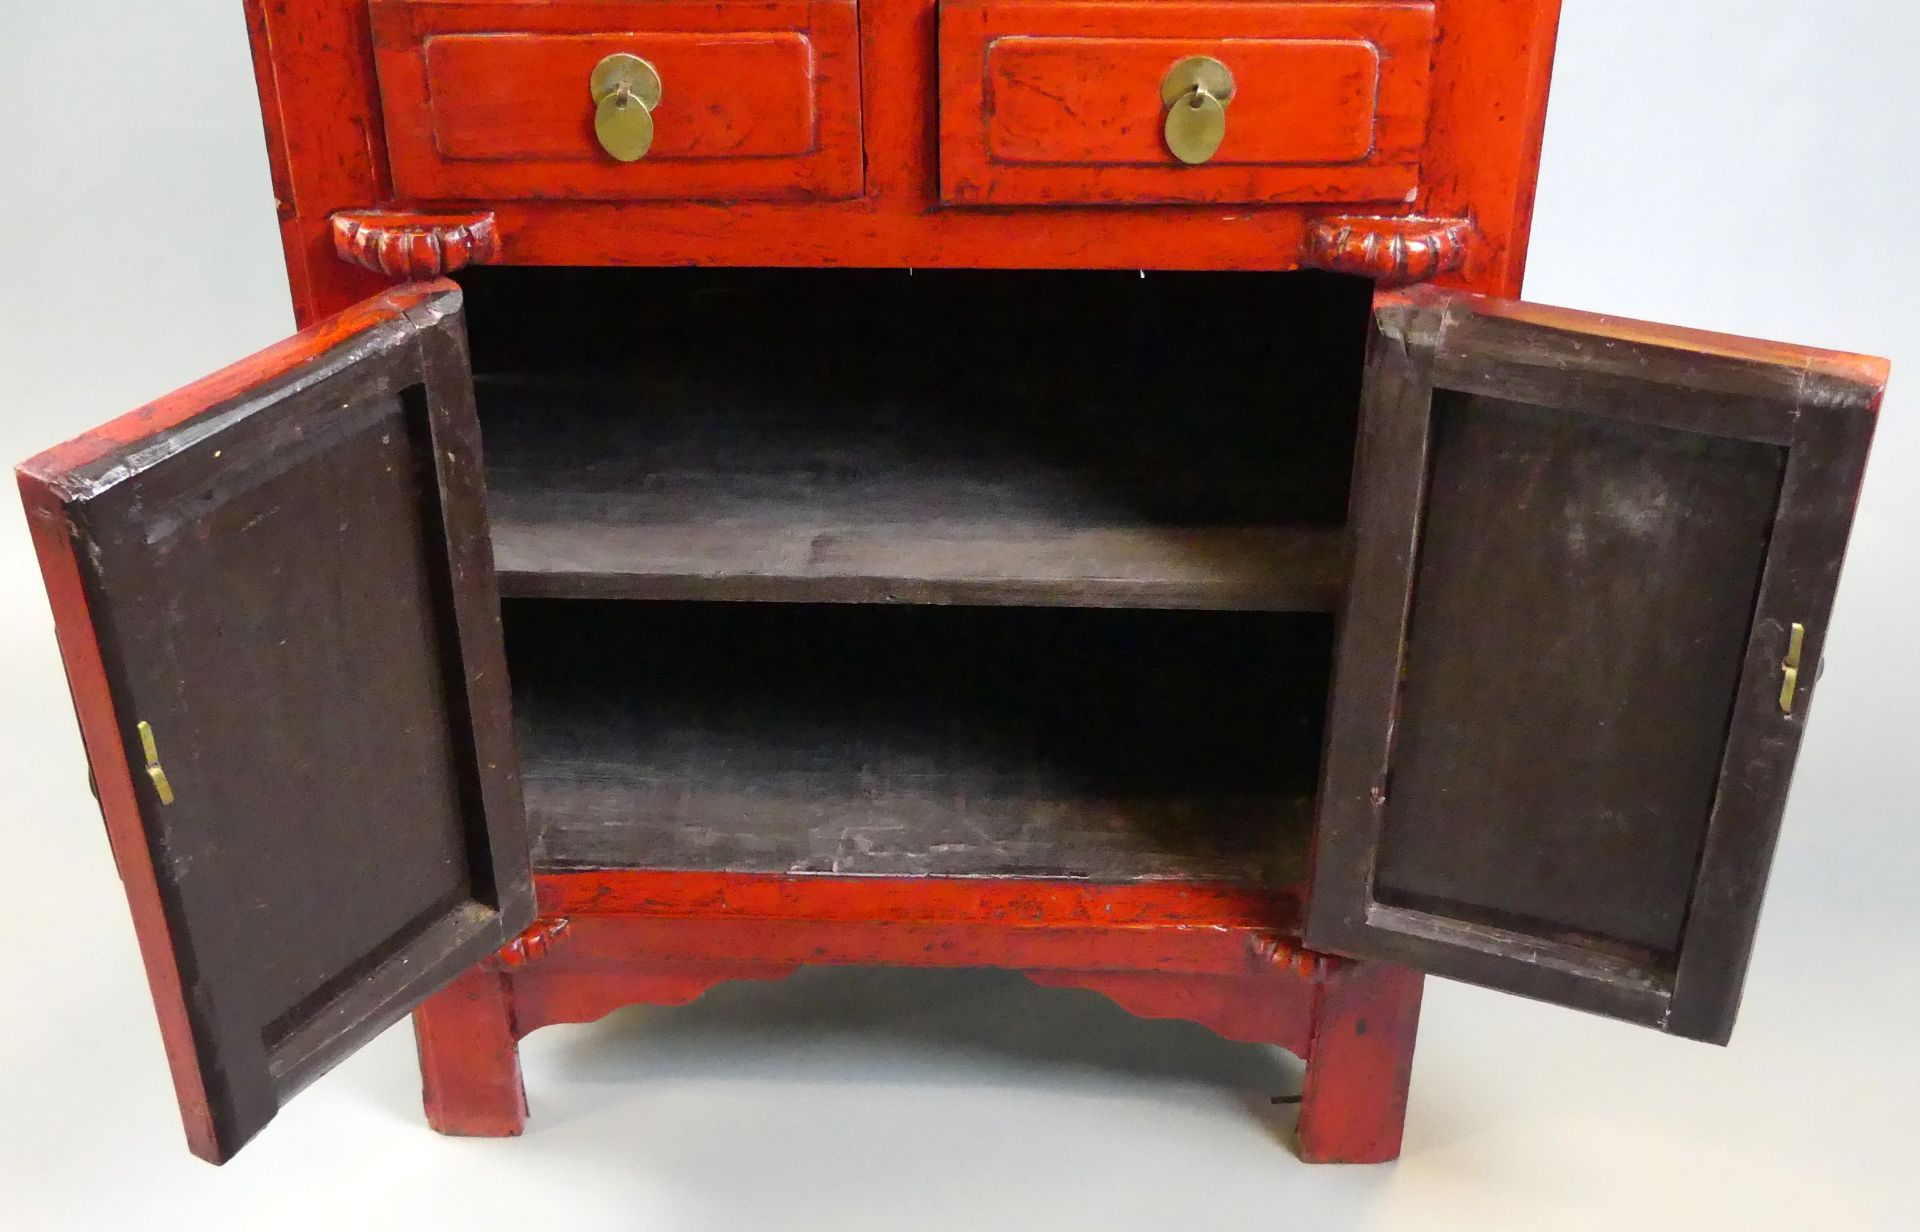 Kommode, Asien, rot lackiert, 2 Schublade, 2 Türen, ca. H. 77 x B. 52 x T. 38 cm - Image 2 of 2